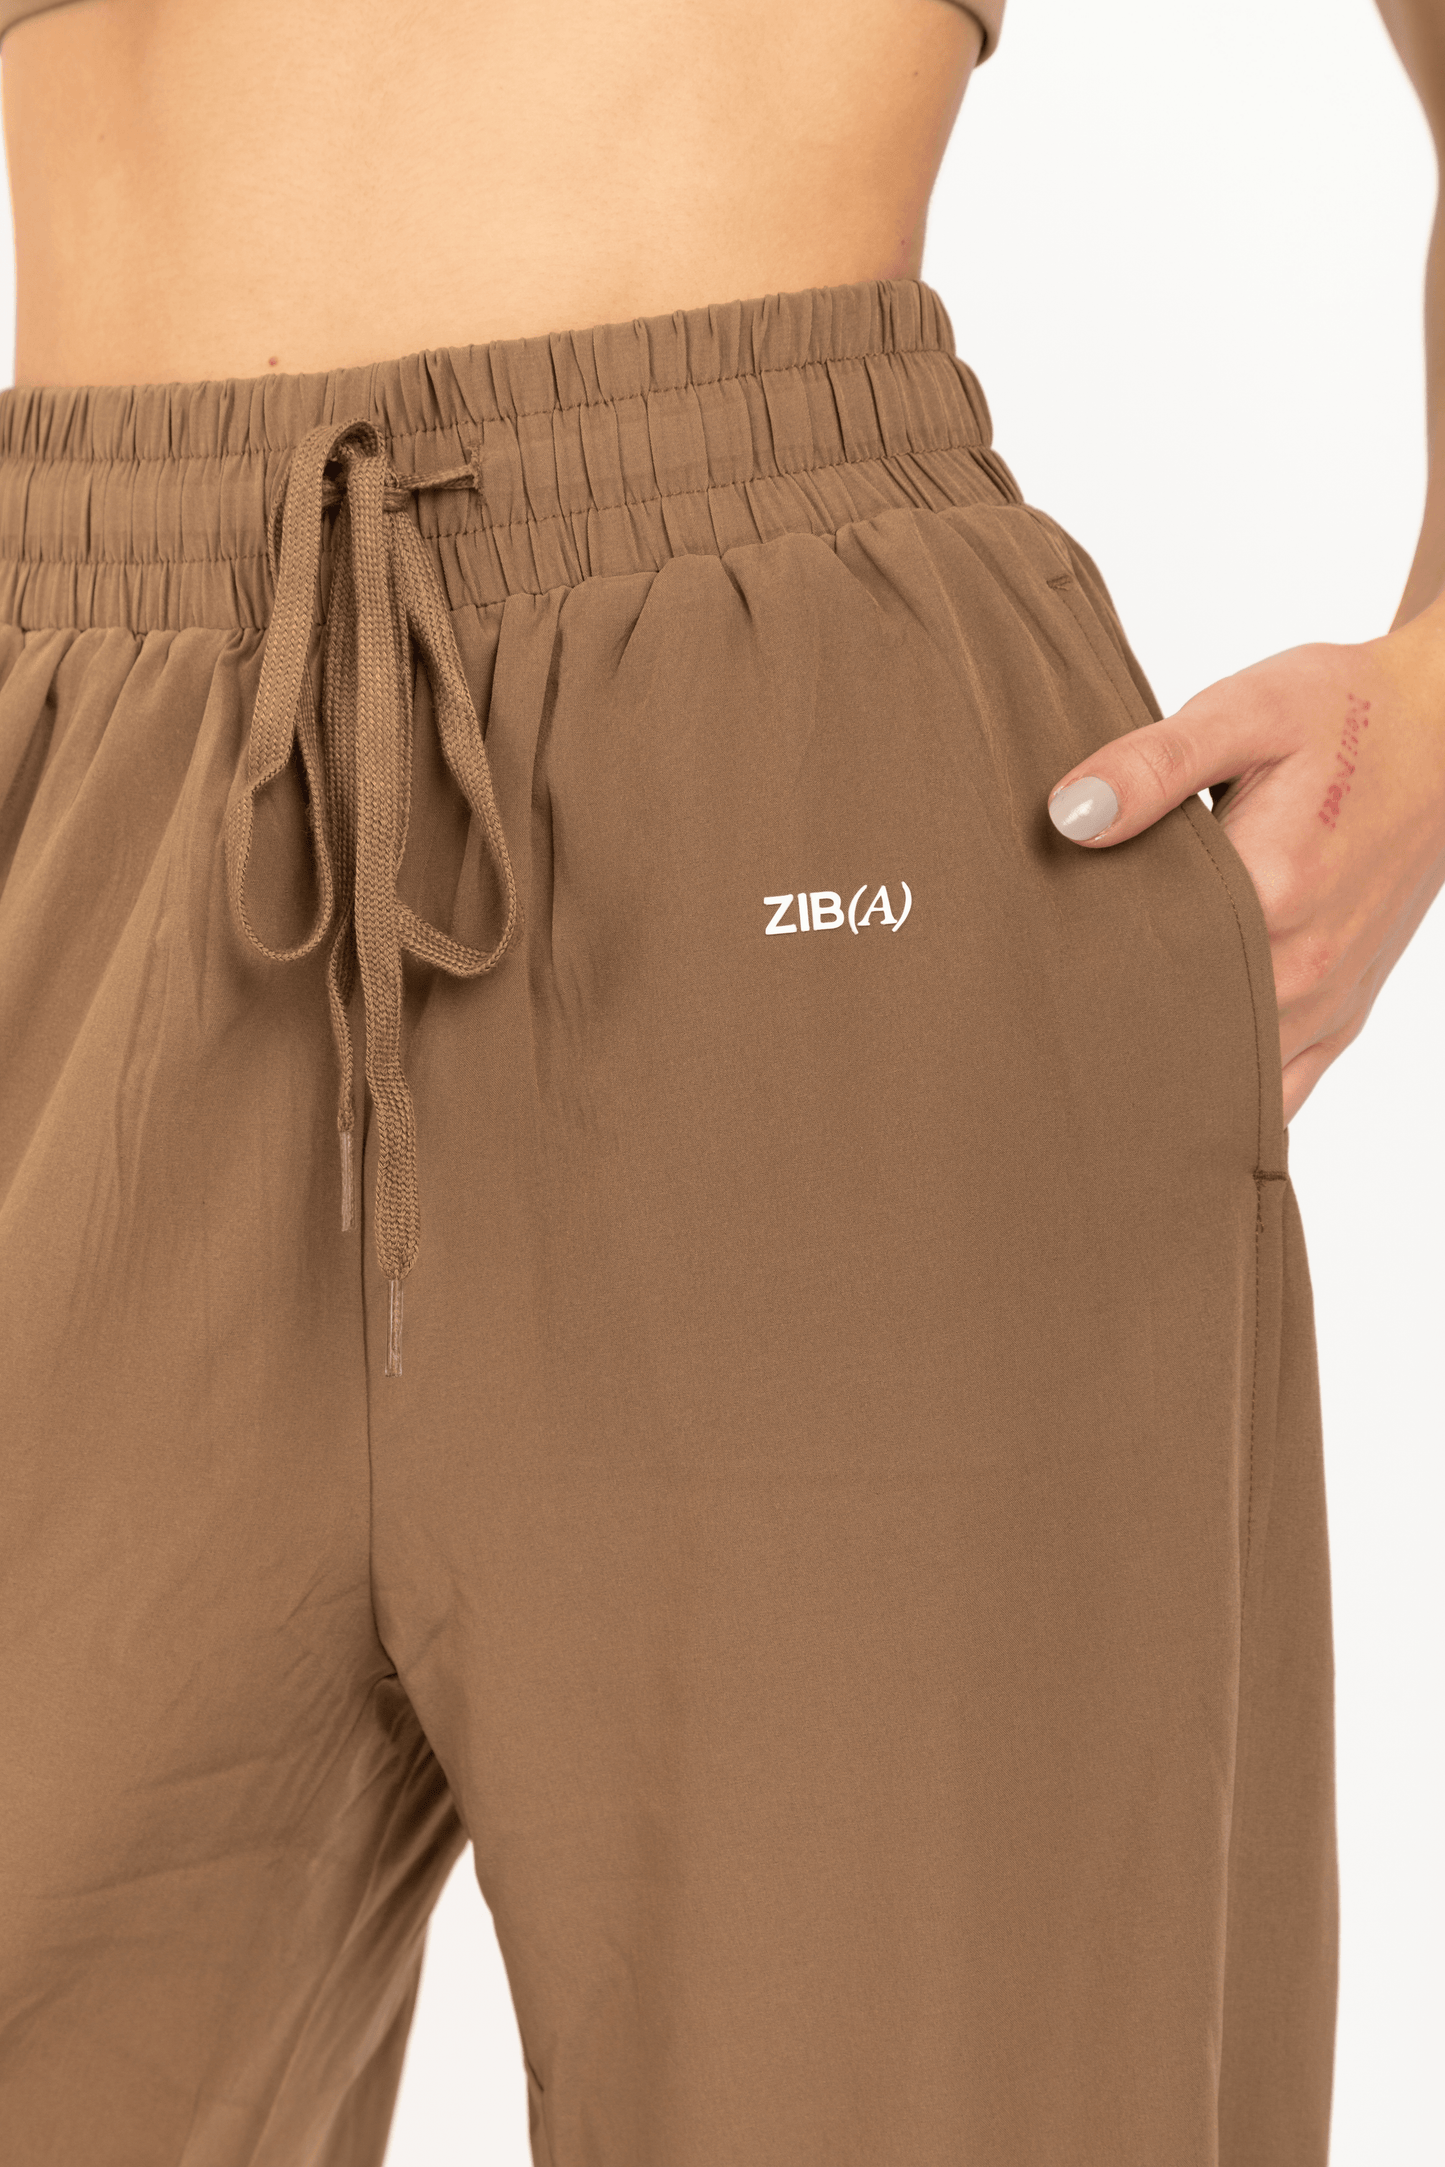 CARGO PANTS AUBURN - Ziba Activewear